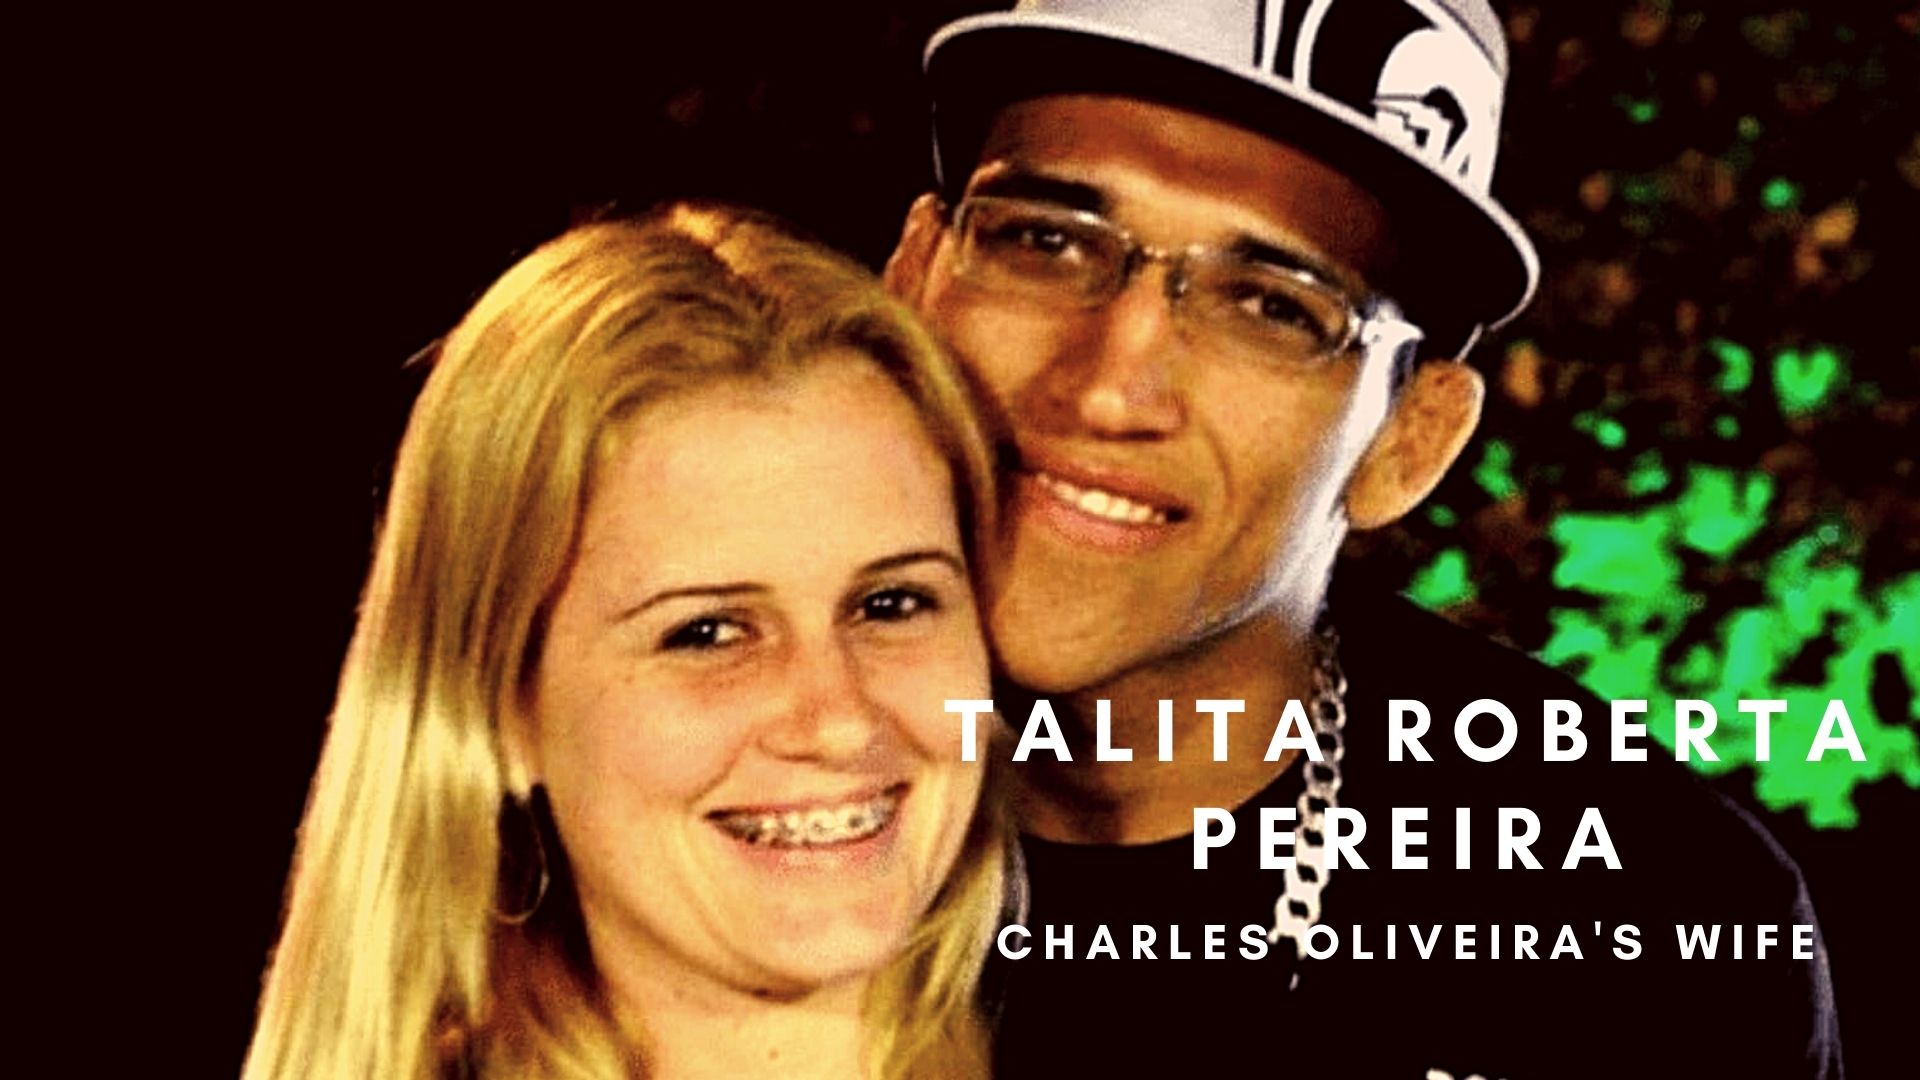 Charles Oliveira wife - Talita Roberta Pereira